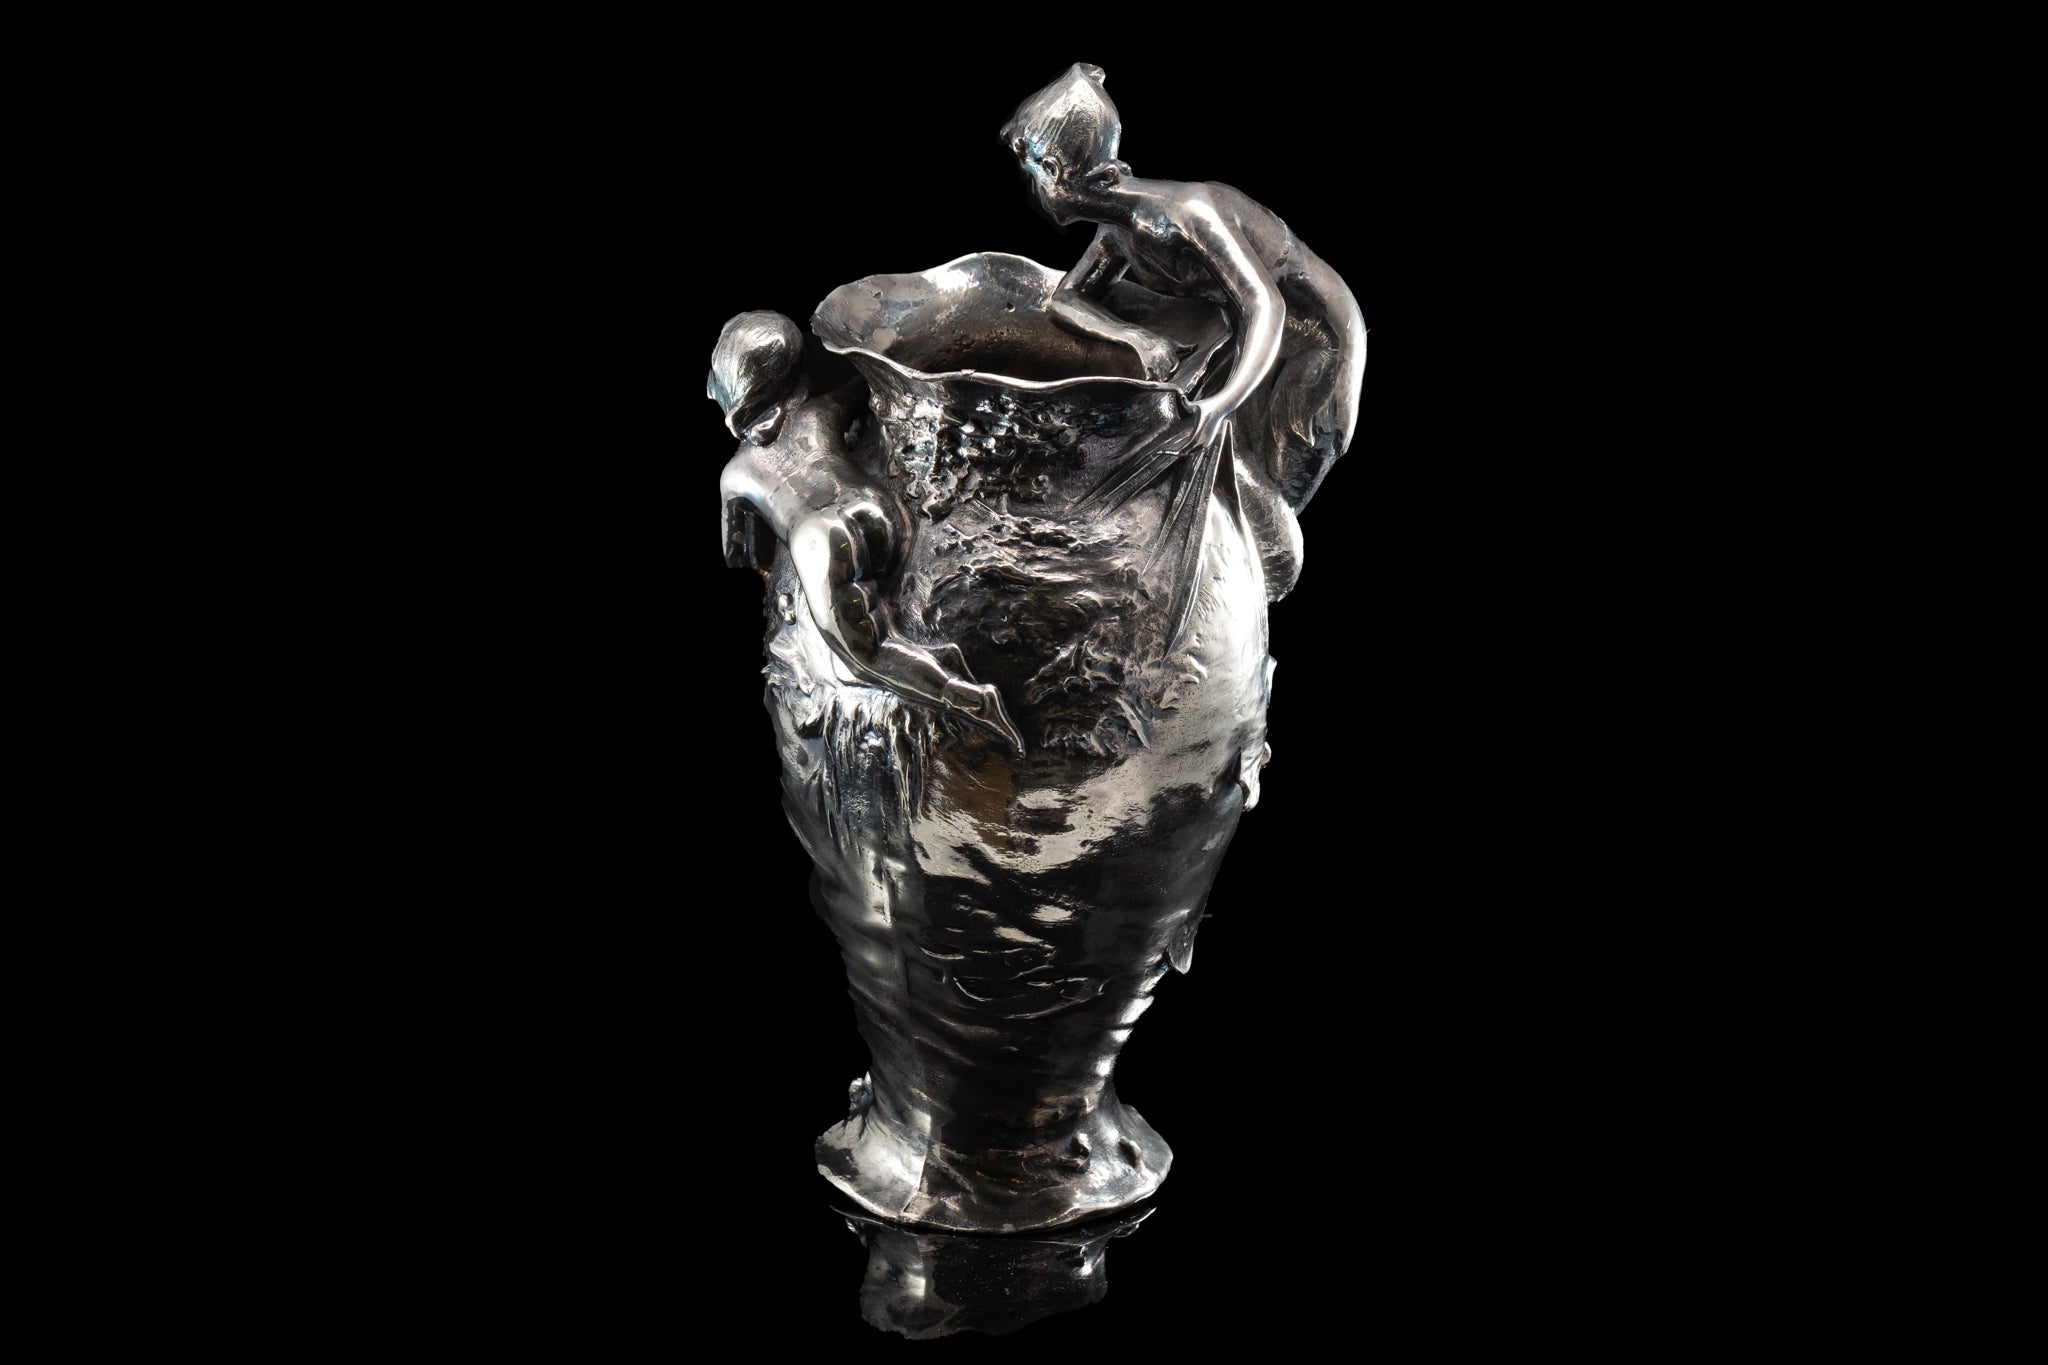 W.M.F. Silverplated Mermaid Vase.